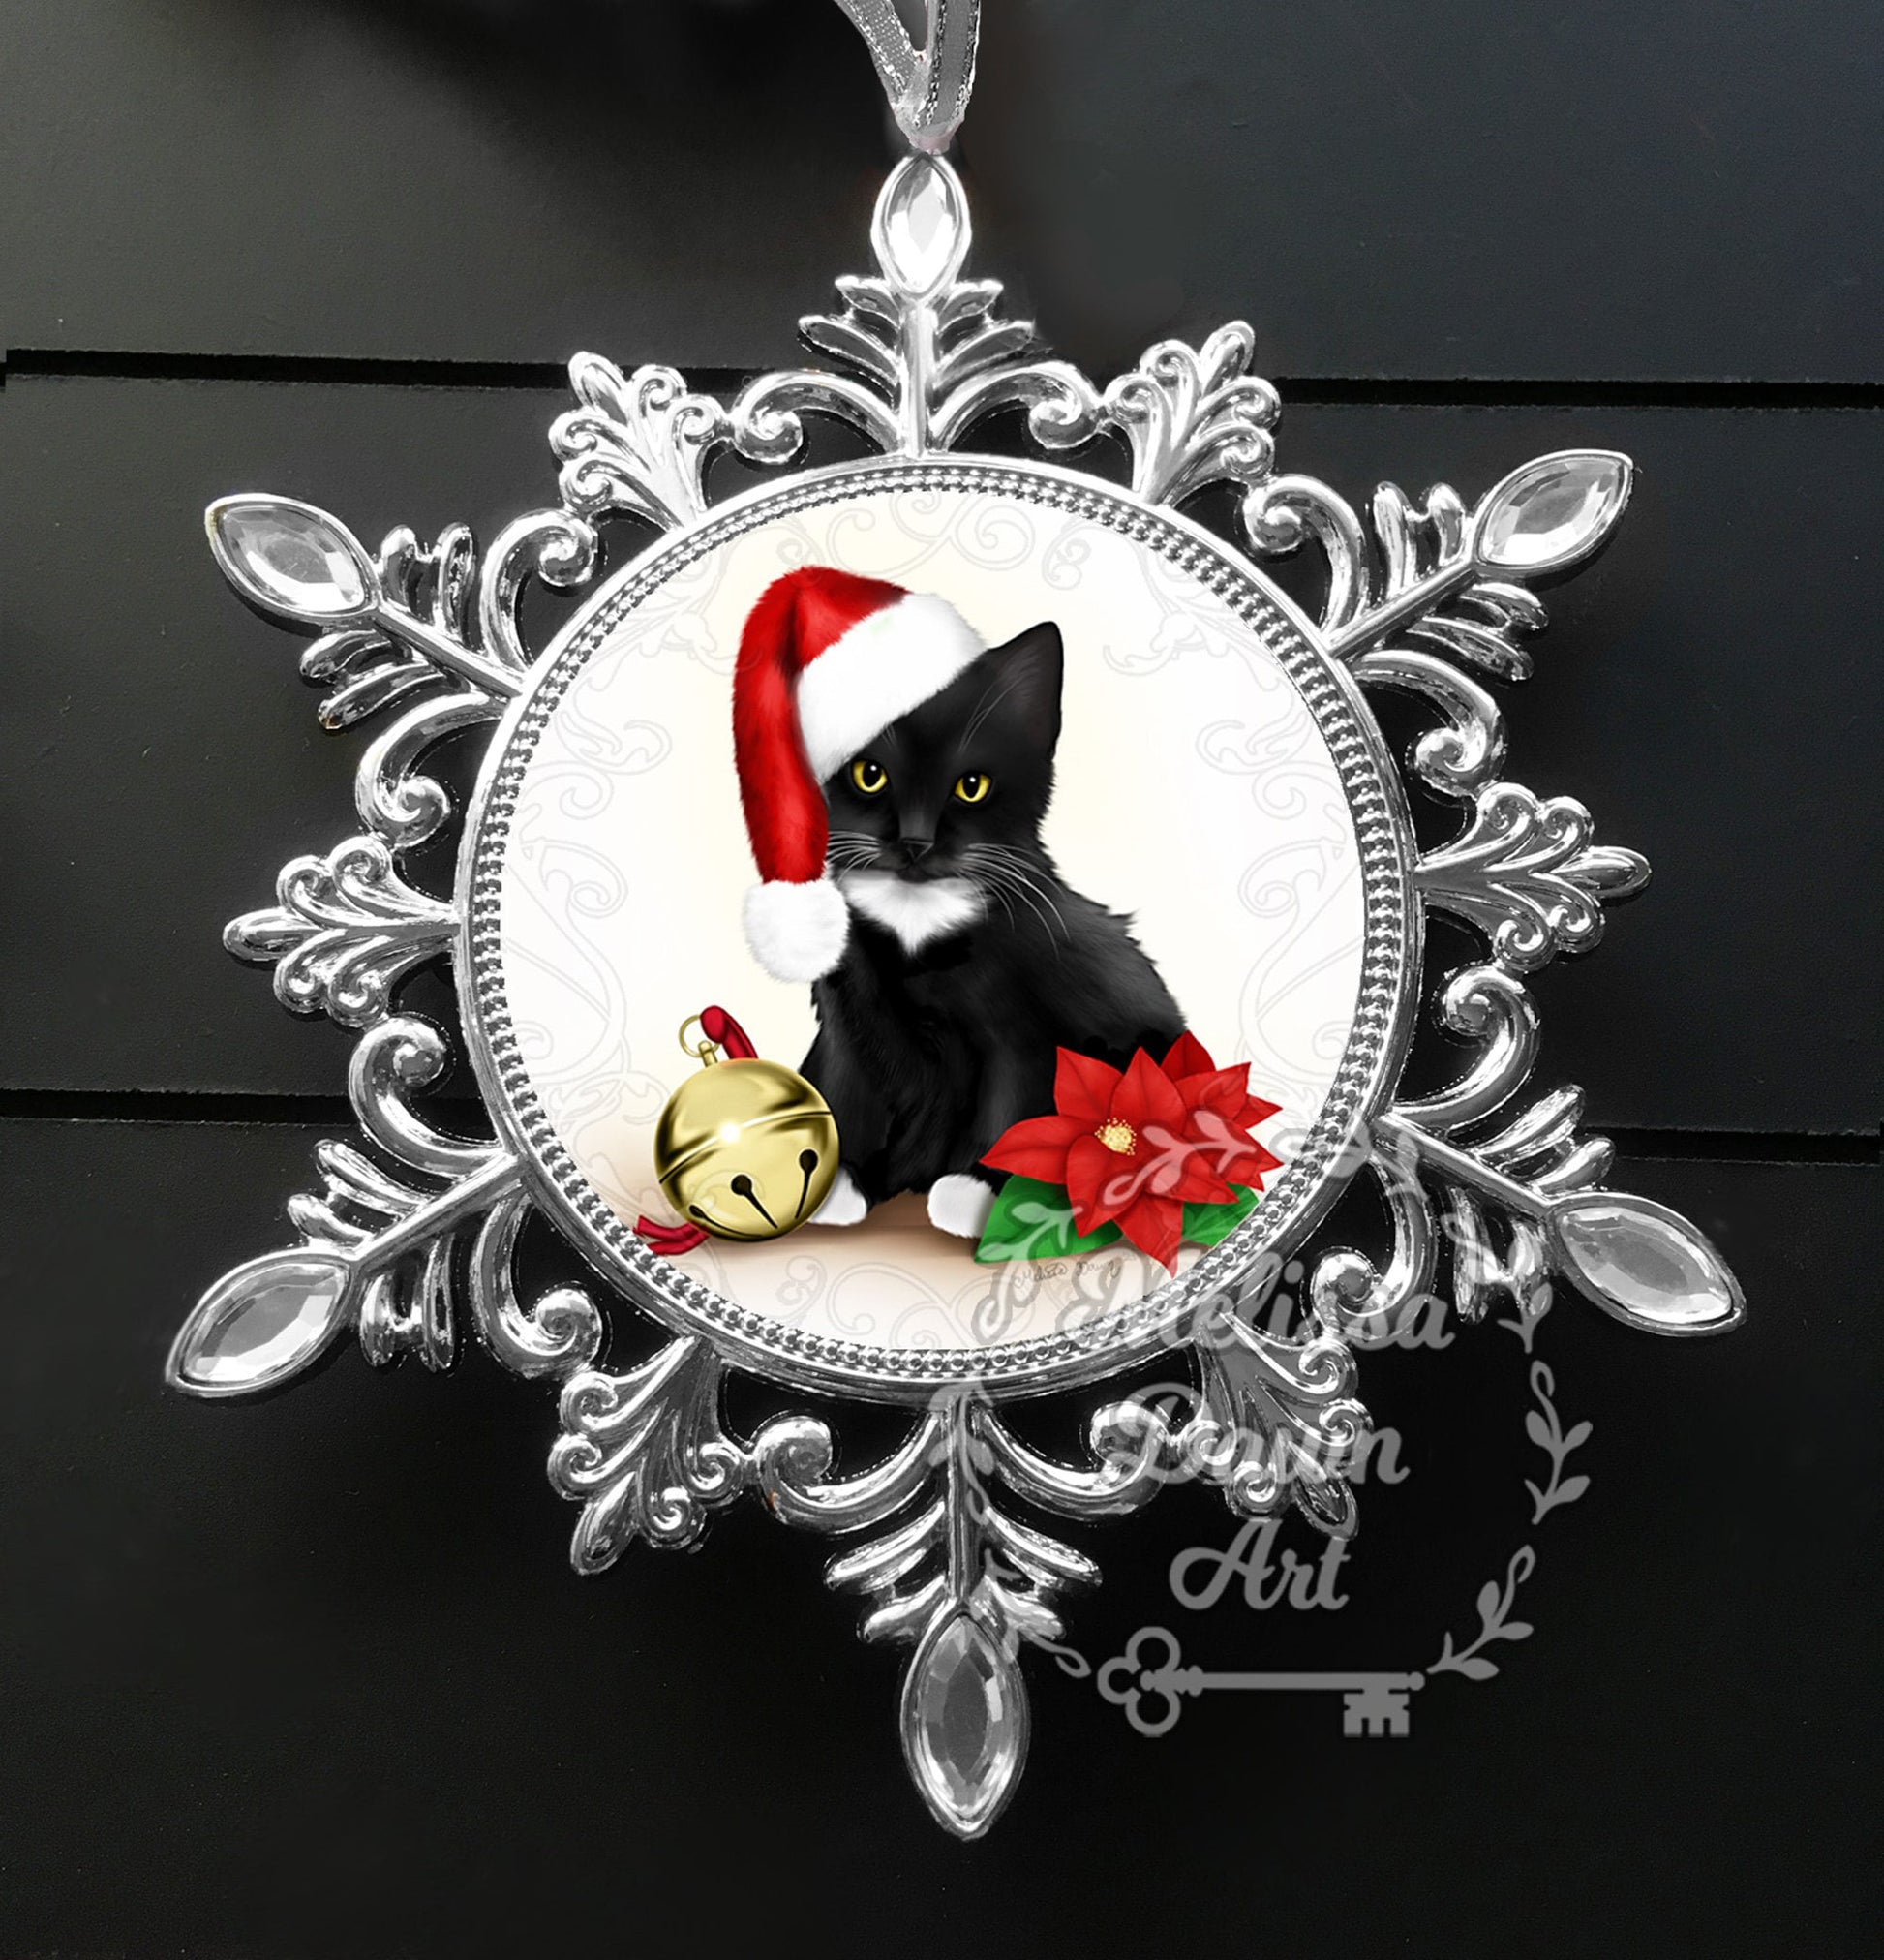 Tuxedo Cat Ornament / Personalized Cat Ornament / Cat Ornament / Cat Lovers Gift / Santa Cat Ornament / Cat in Santa Hat / Tuxedo Ornament